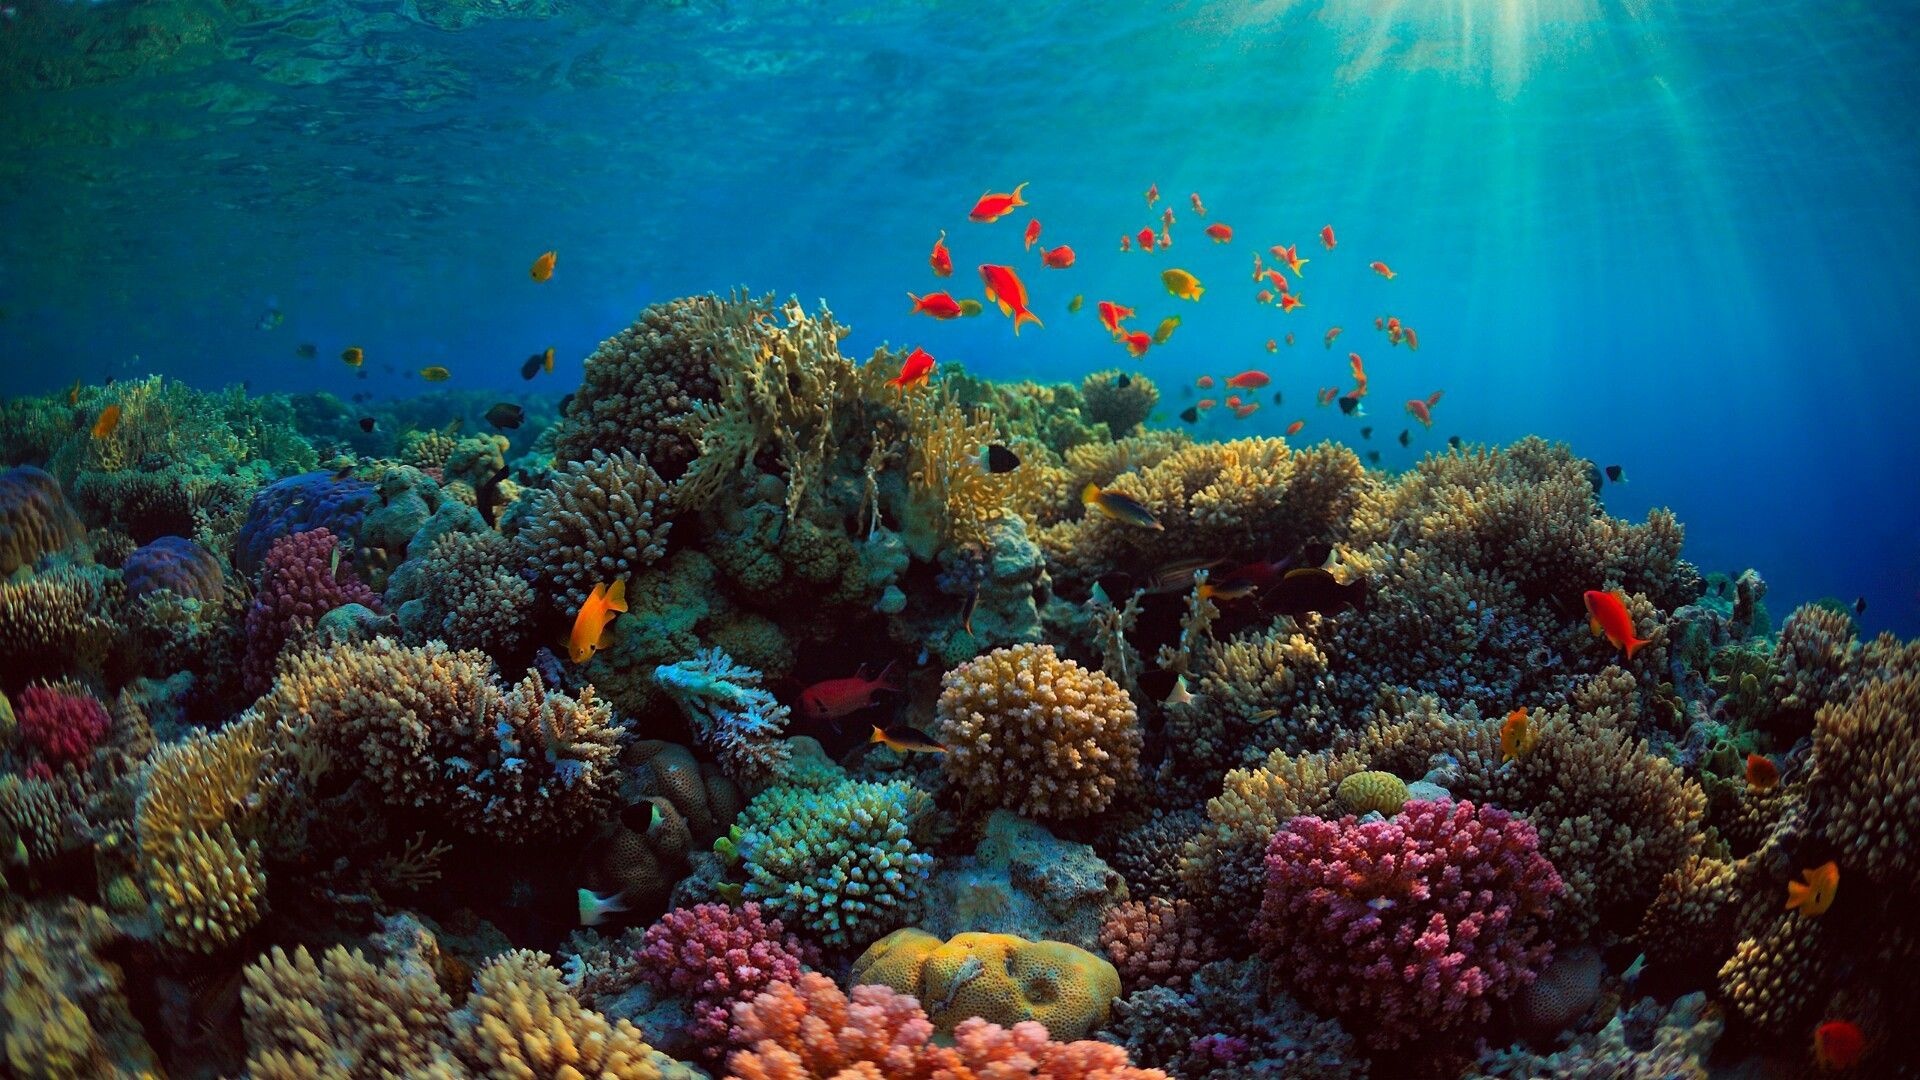 Barrier reef wonders, Underwater splendor, Marine biodiversity, Colorful corals, 1920x1080 Full HD Desktop